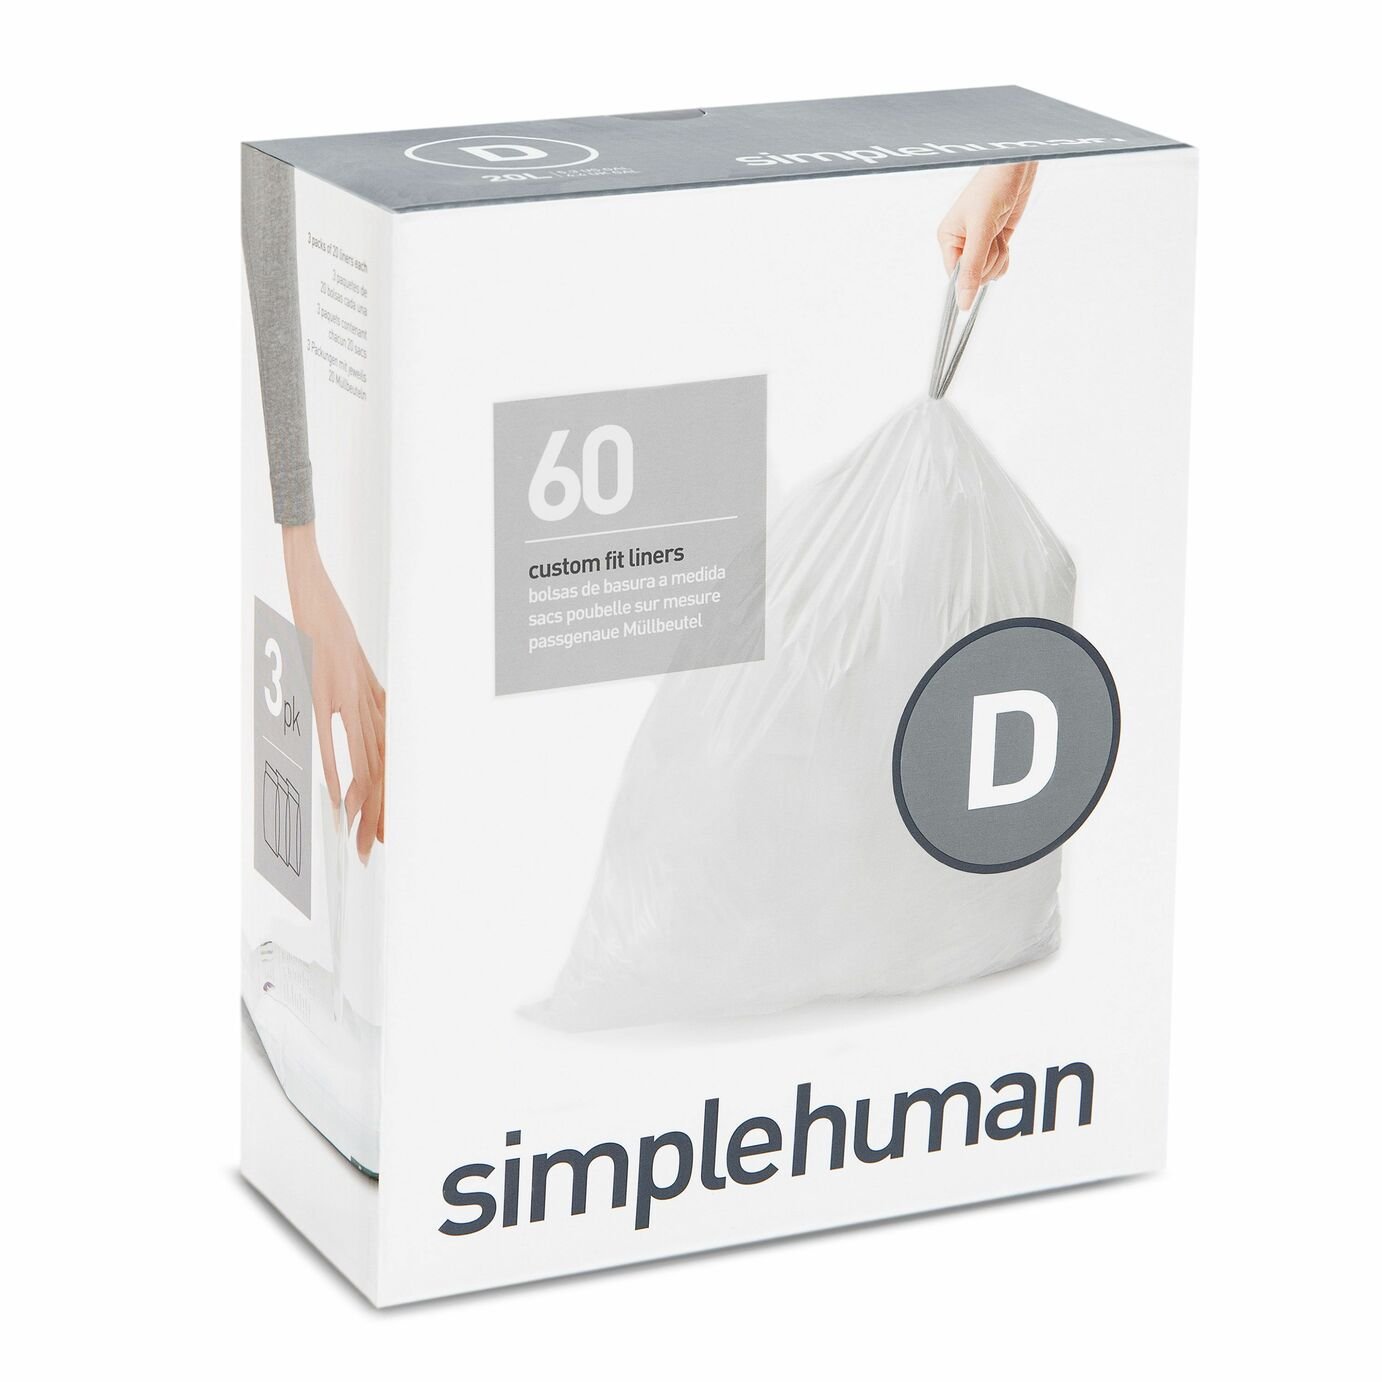 simplehuman Code D Bin Liners - Pack of 60